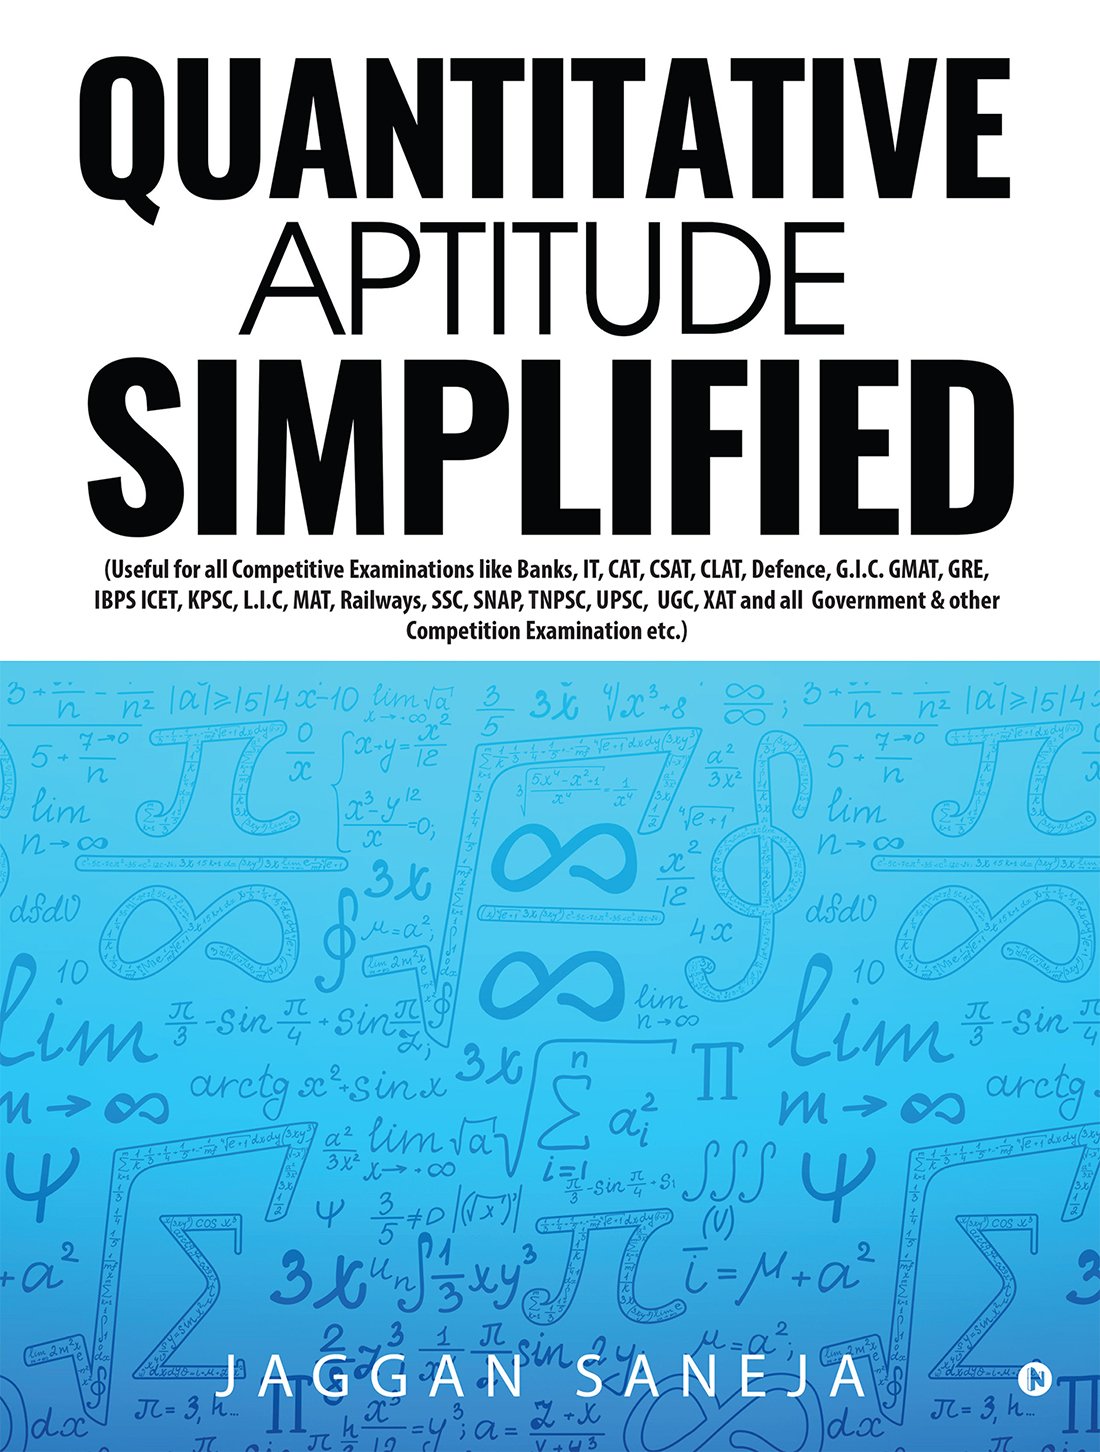 quantitative-aptitude-simplified-softarchive